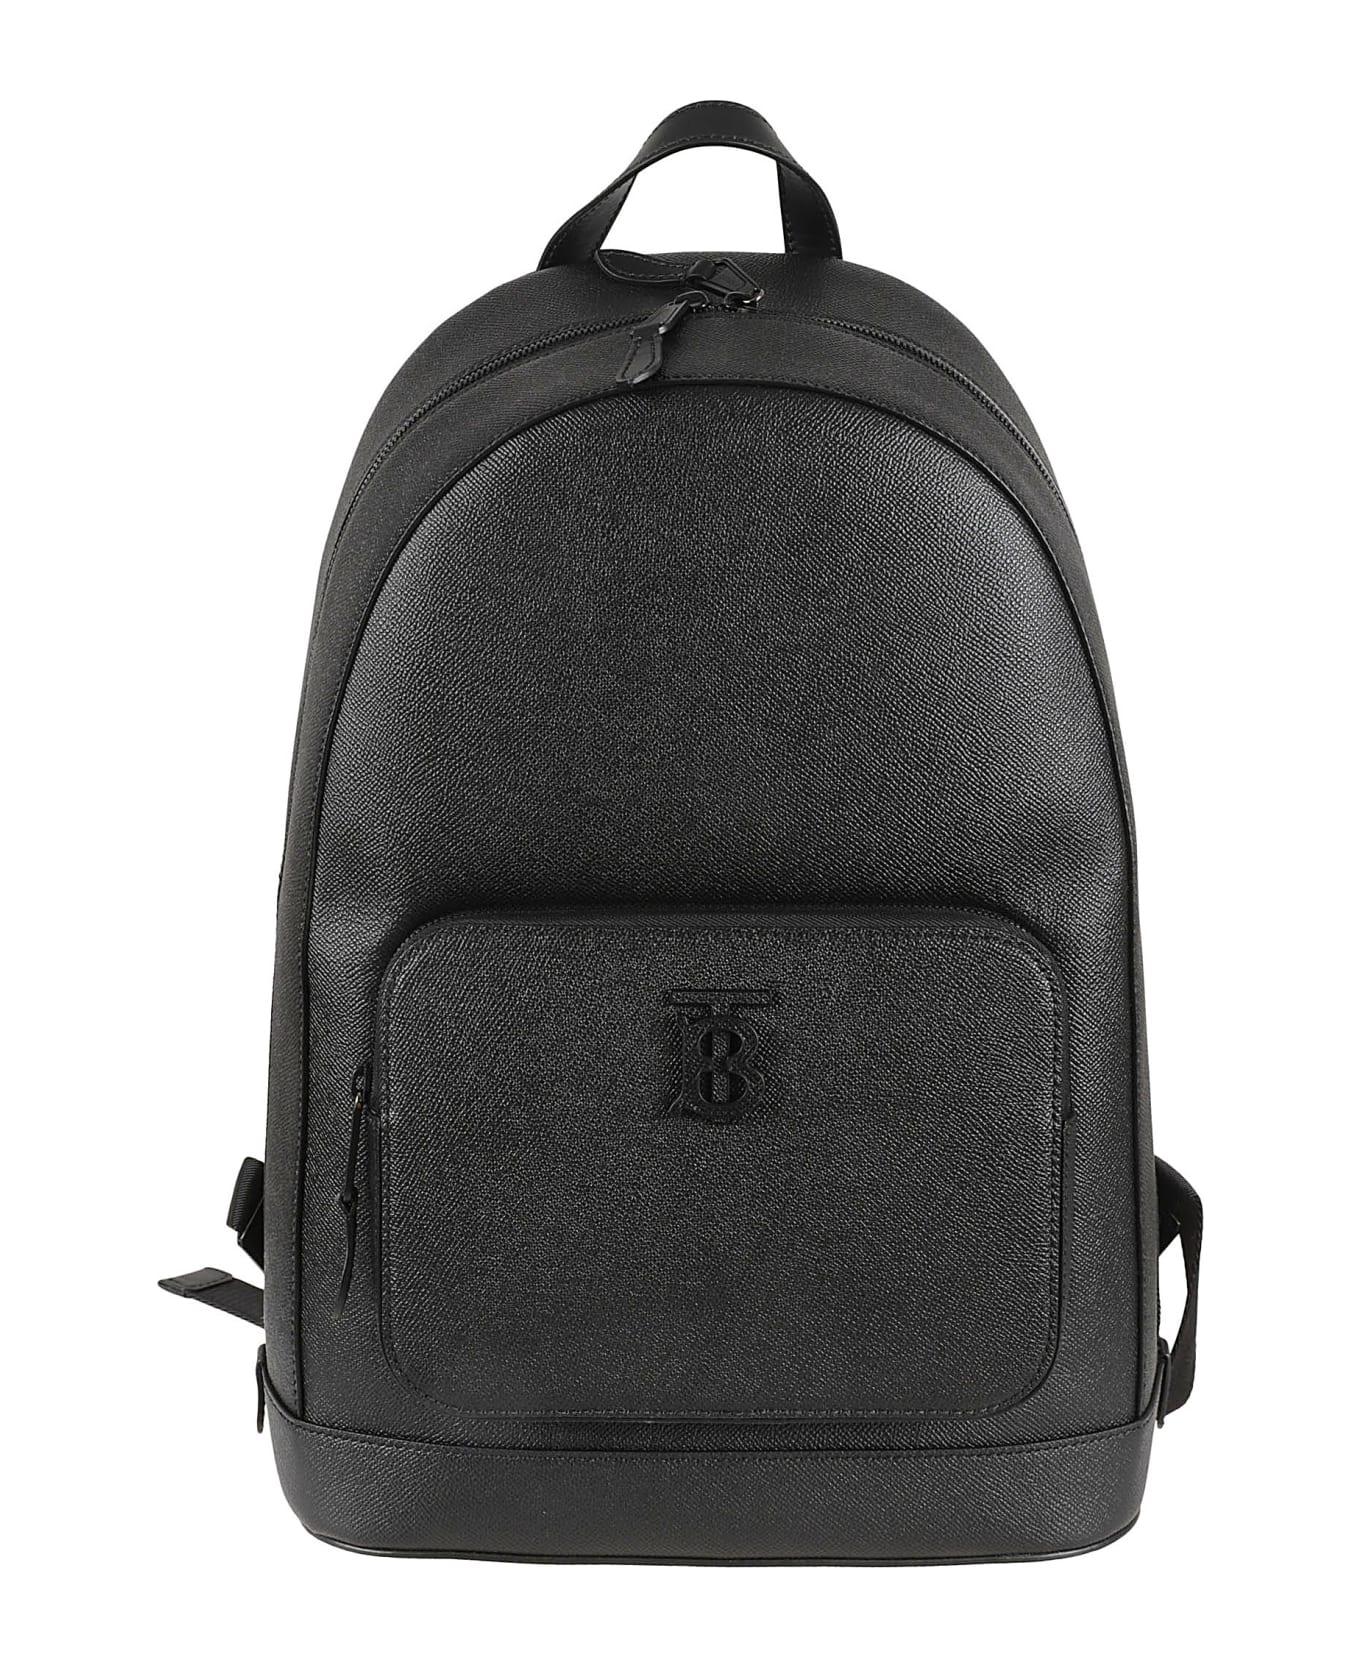 Burberry Logo Backpack - Black